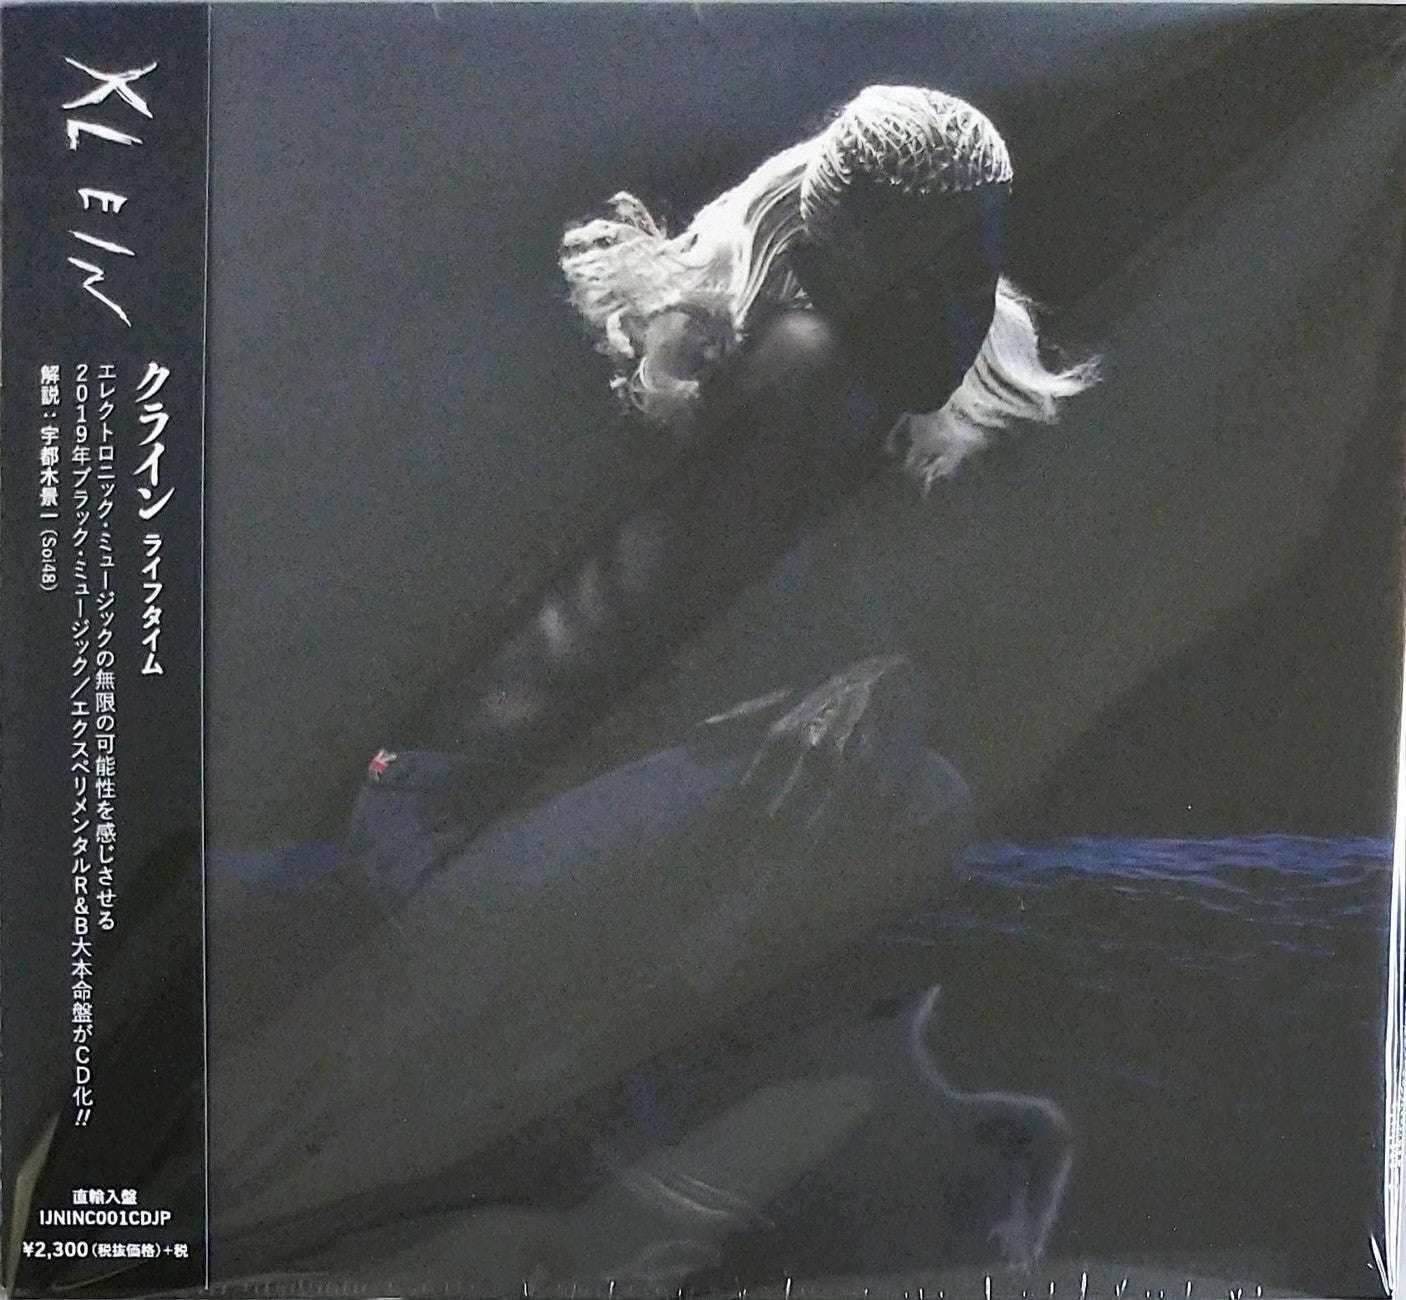 Klein - Lifetime - Import CD